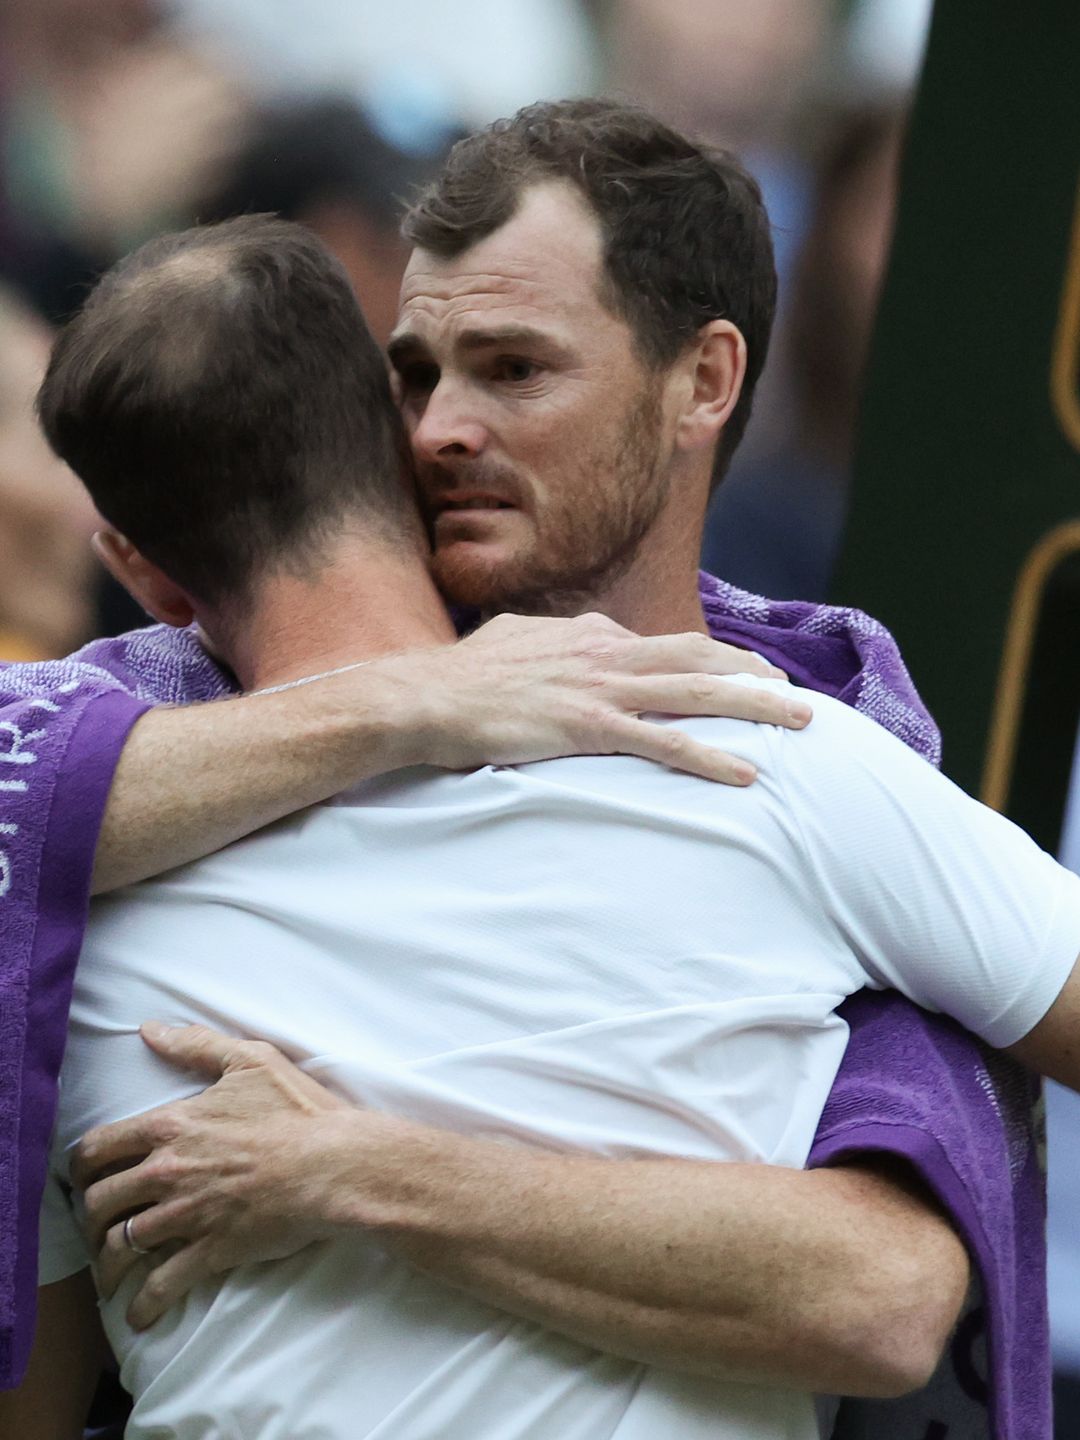 Andy Murray and Jamie Murray hugging